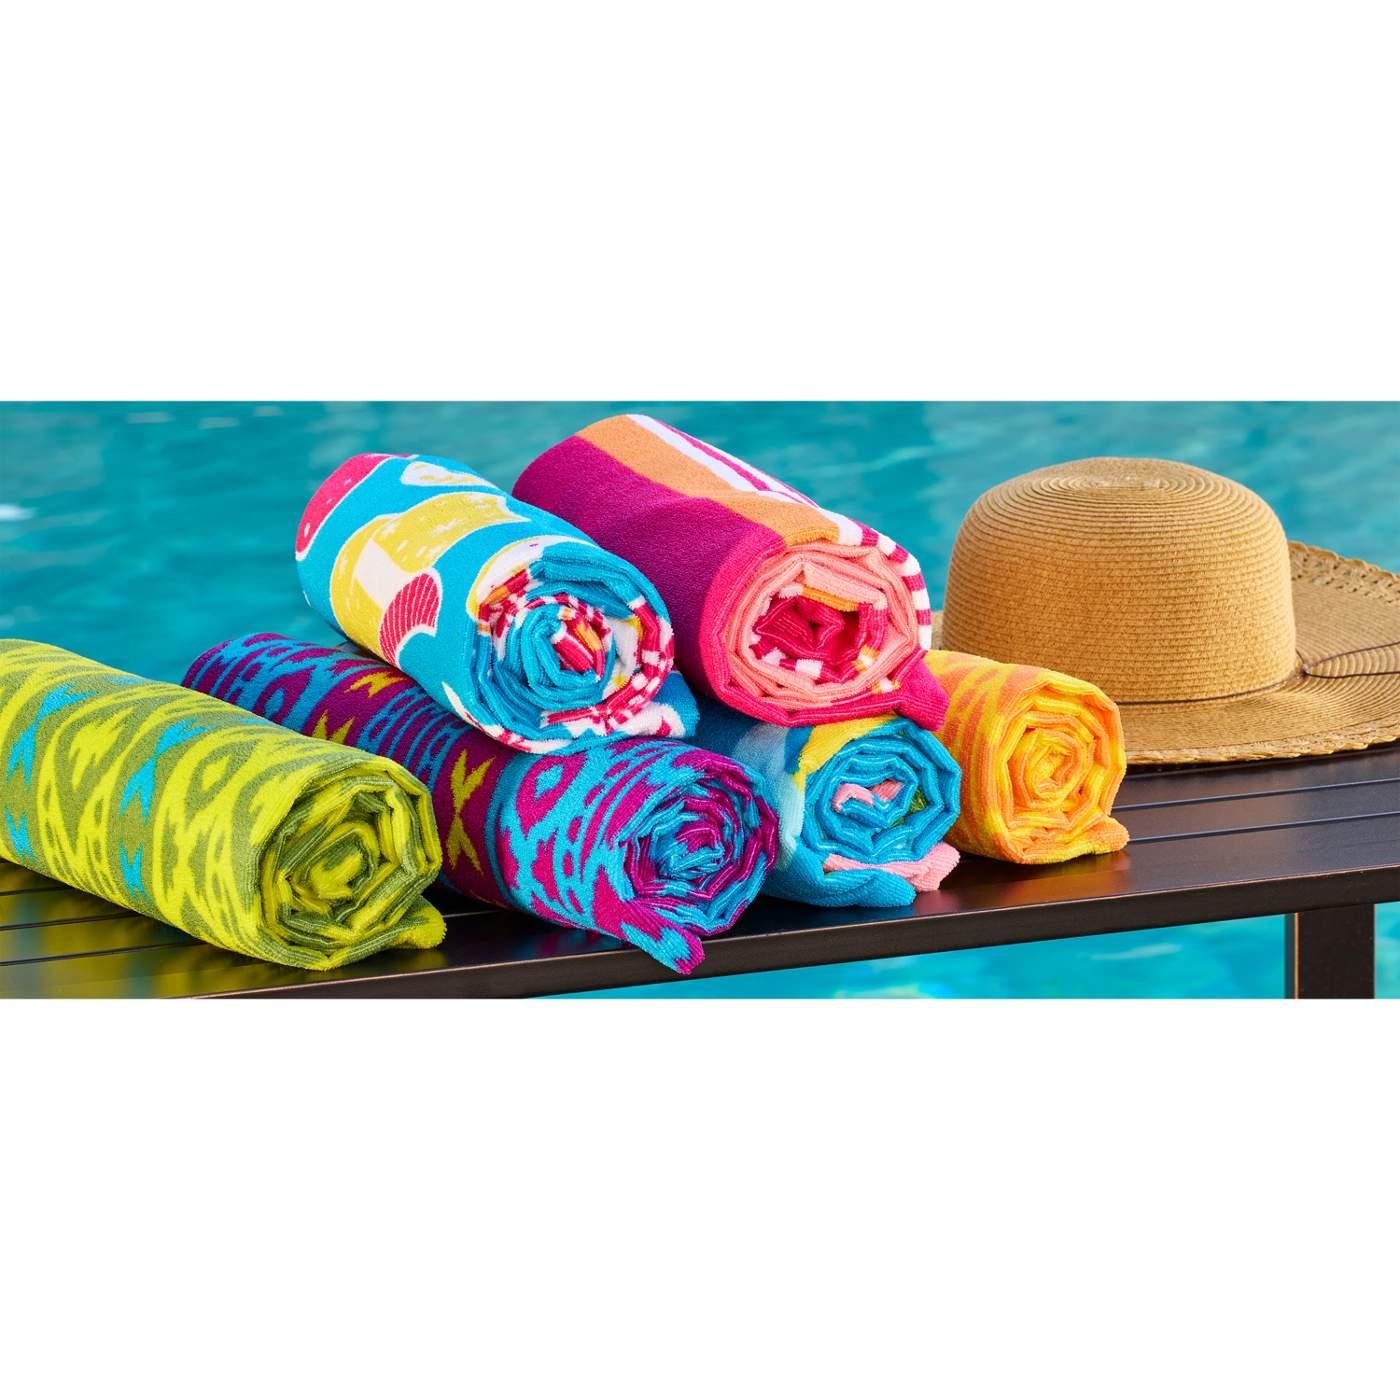 Destination Holiday Striped Beach Towel Set - Pink & Blue, 2 Pk; image 2 of 2